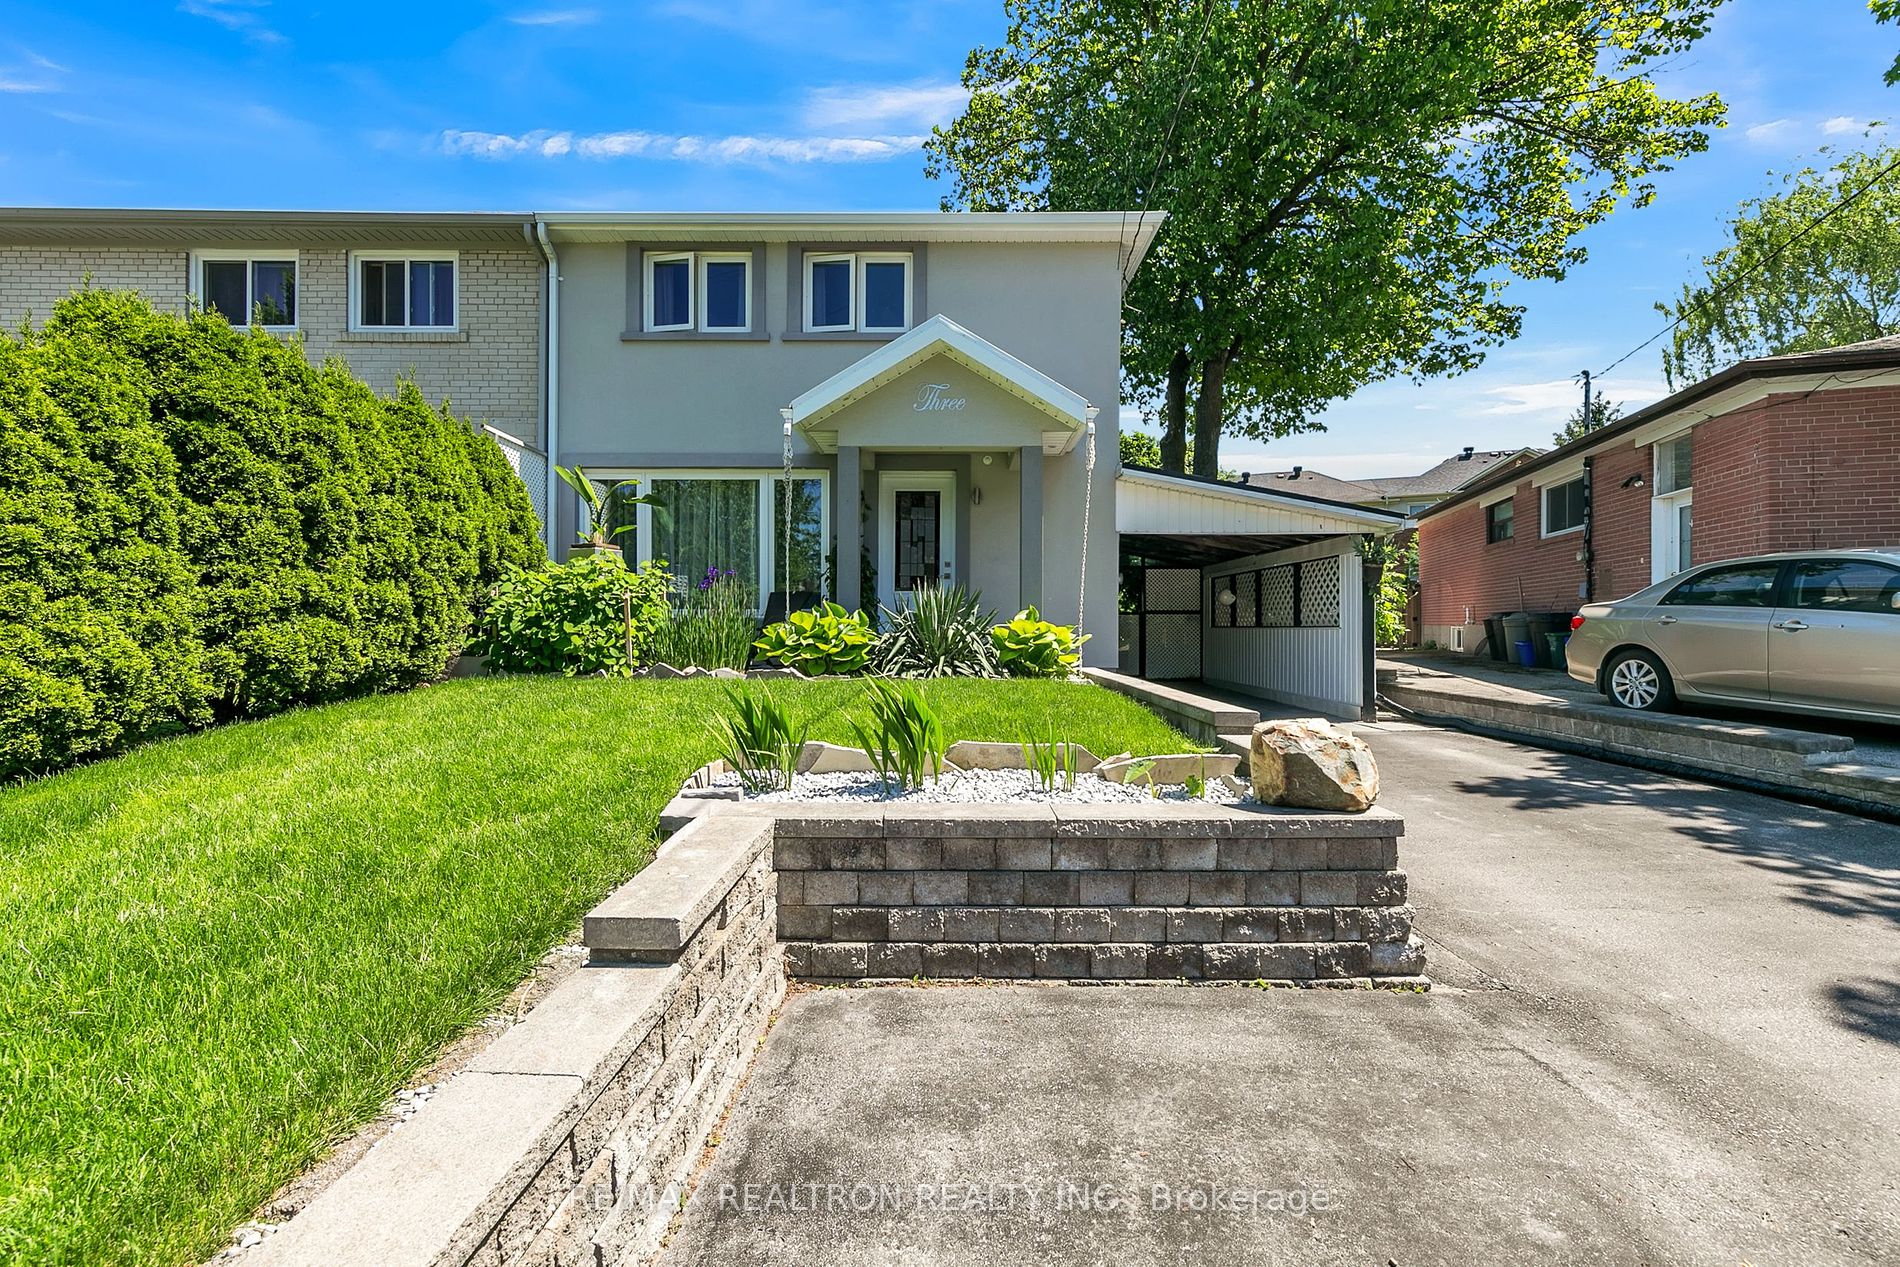 Semi-Detached house for sale at 3 Davis Rd Aurora Ontario